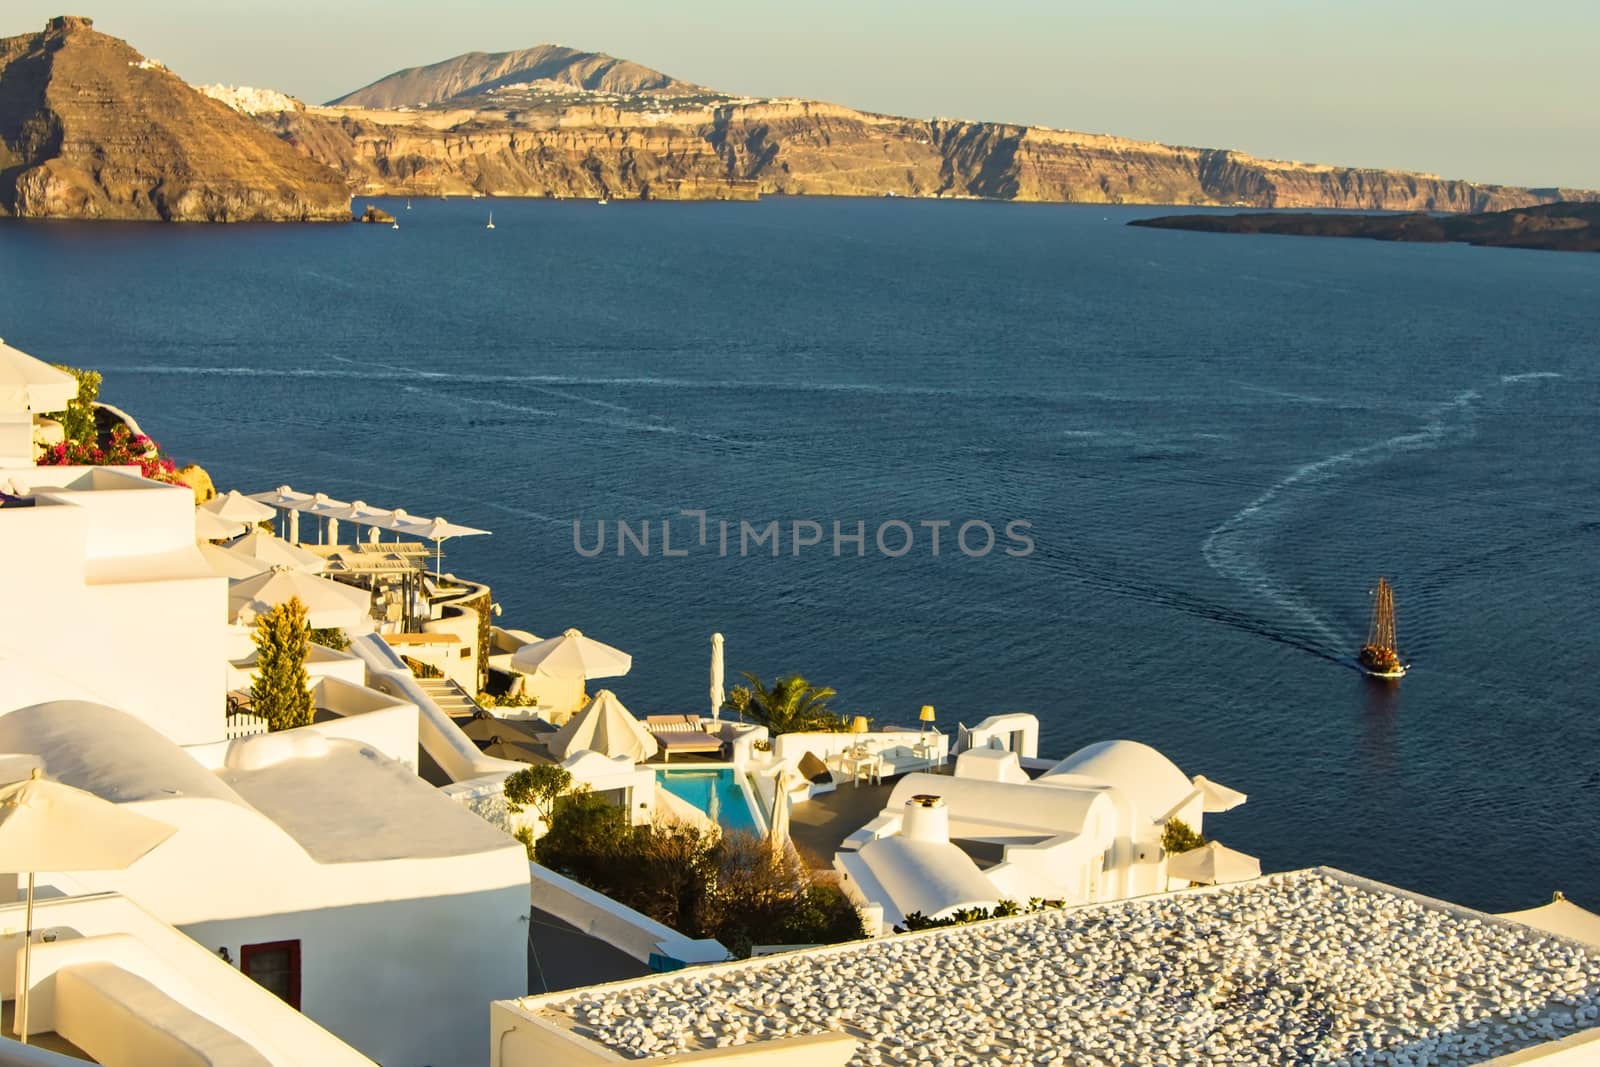 The beautiful view - Santorini - Greece by huntz